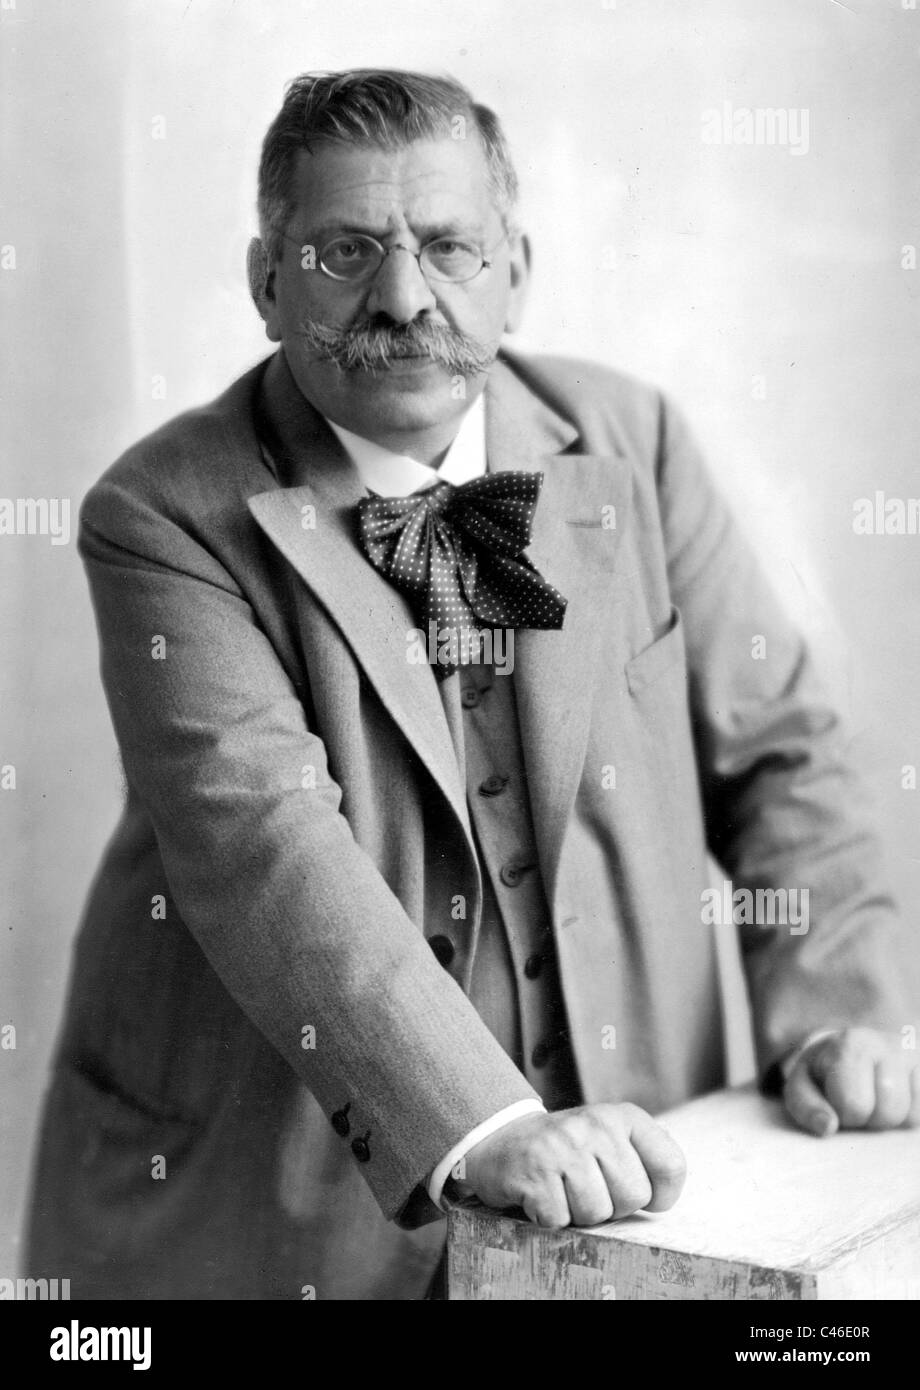 Magnus Hirschfeld, 1928 Stockfotografie - Alamy